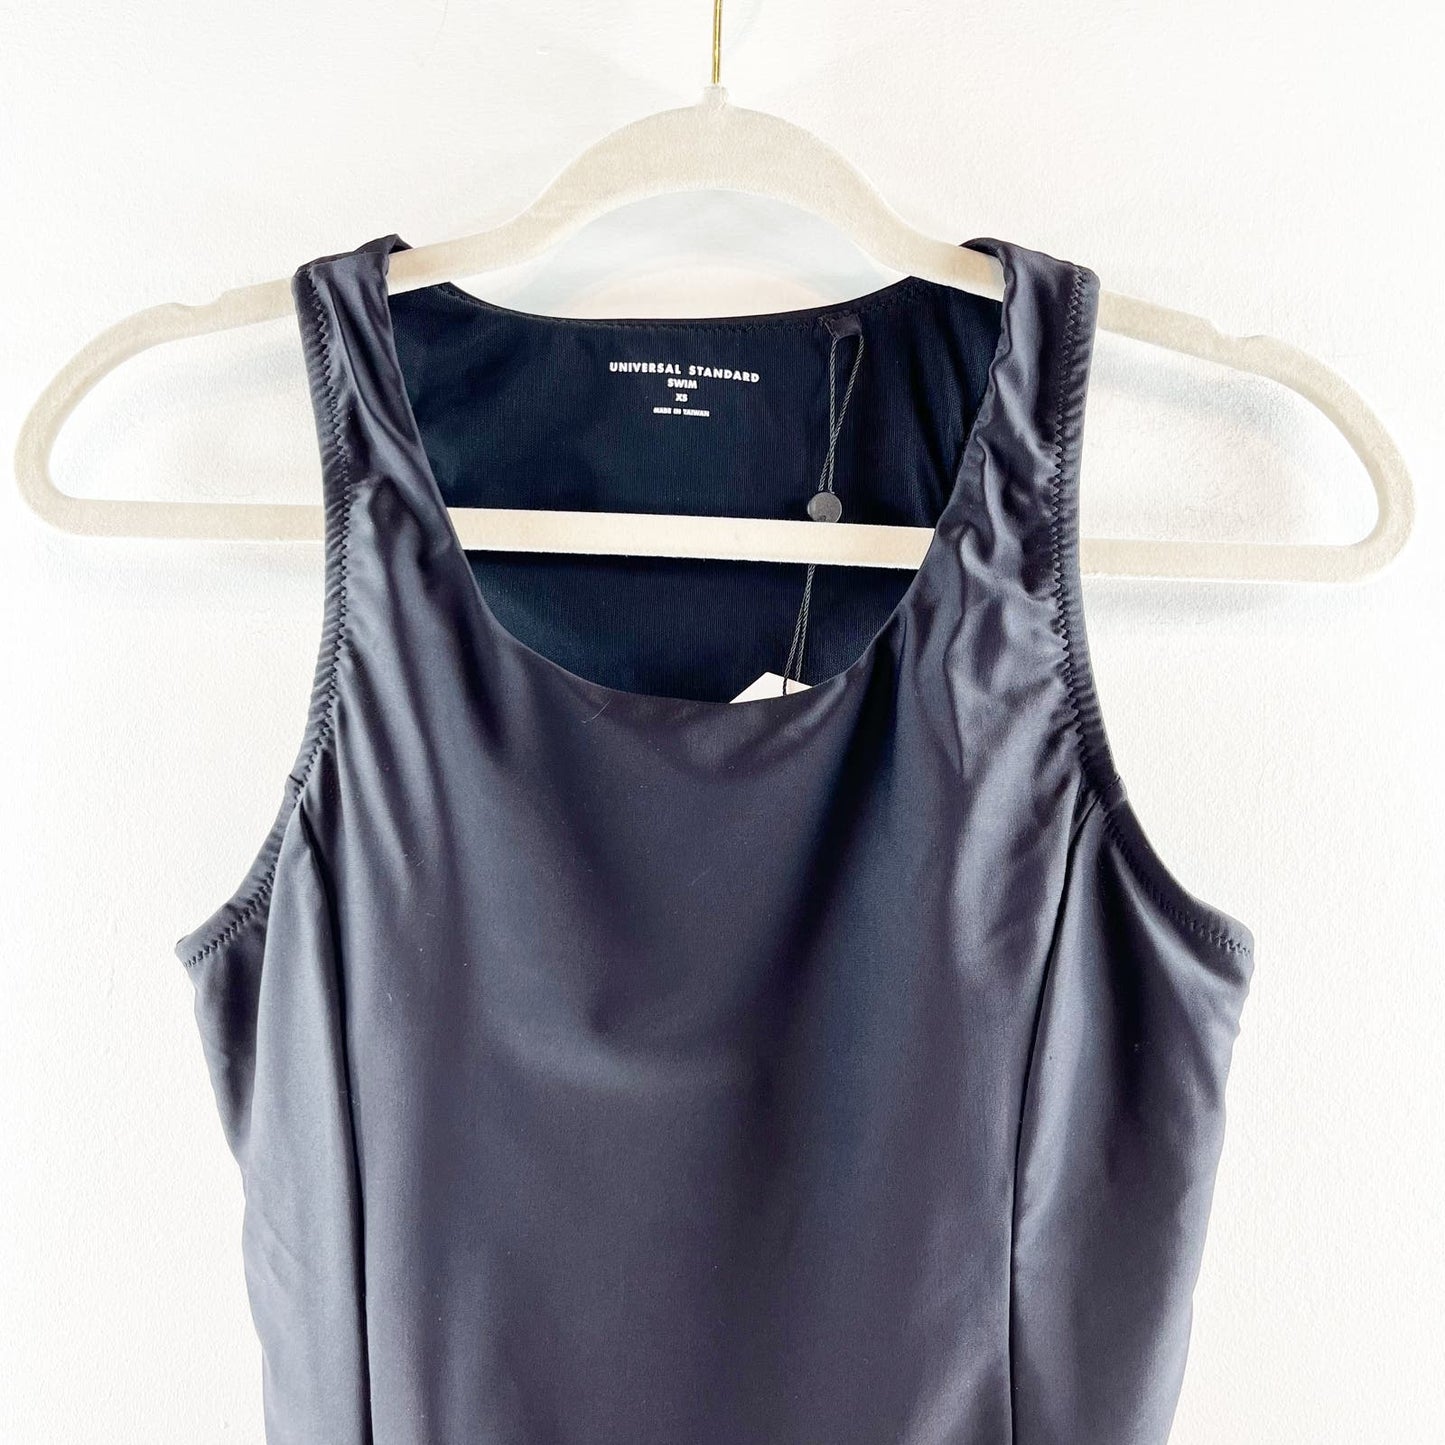 Universal Standard Swim The Swim Tank Top Sleeveless Bathing Suit Top Black XS